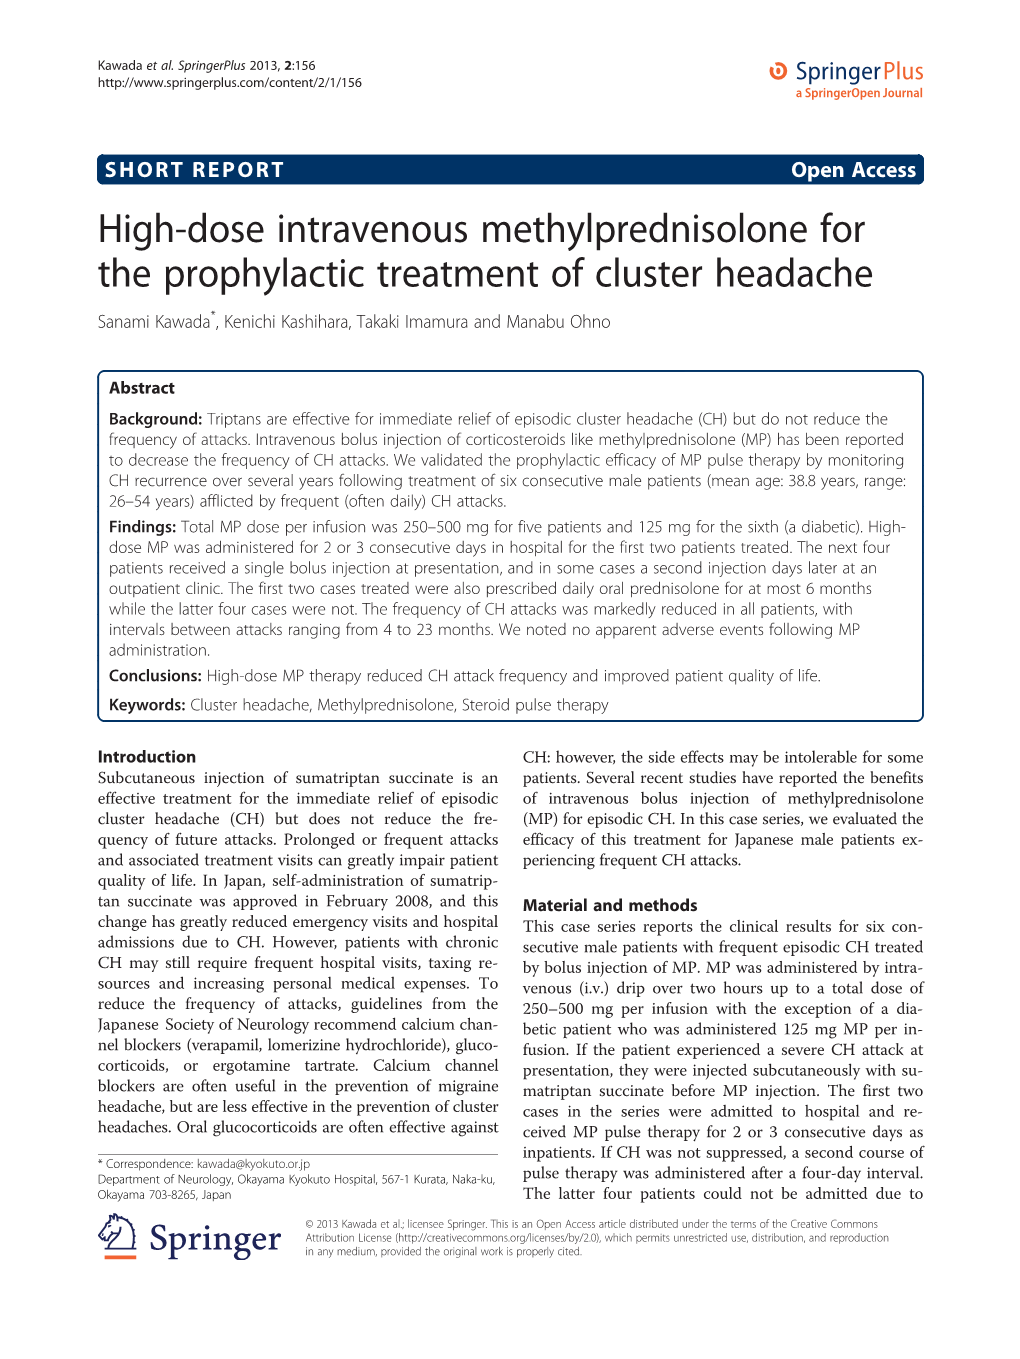 High-Dose Intravenous Methylprednisolone for the Prophylactic Treatment of Cluster Headache Sanami Kawada*, Kenichi Kashihara, Takaki Imamura and Manabu Ohno